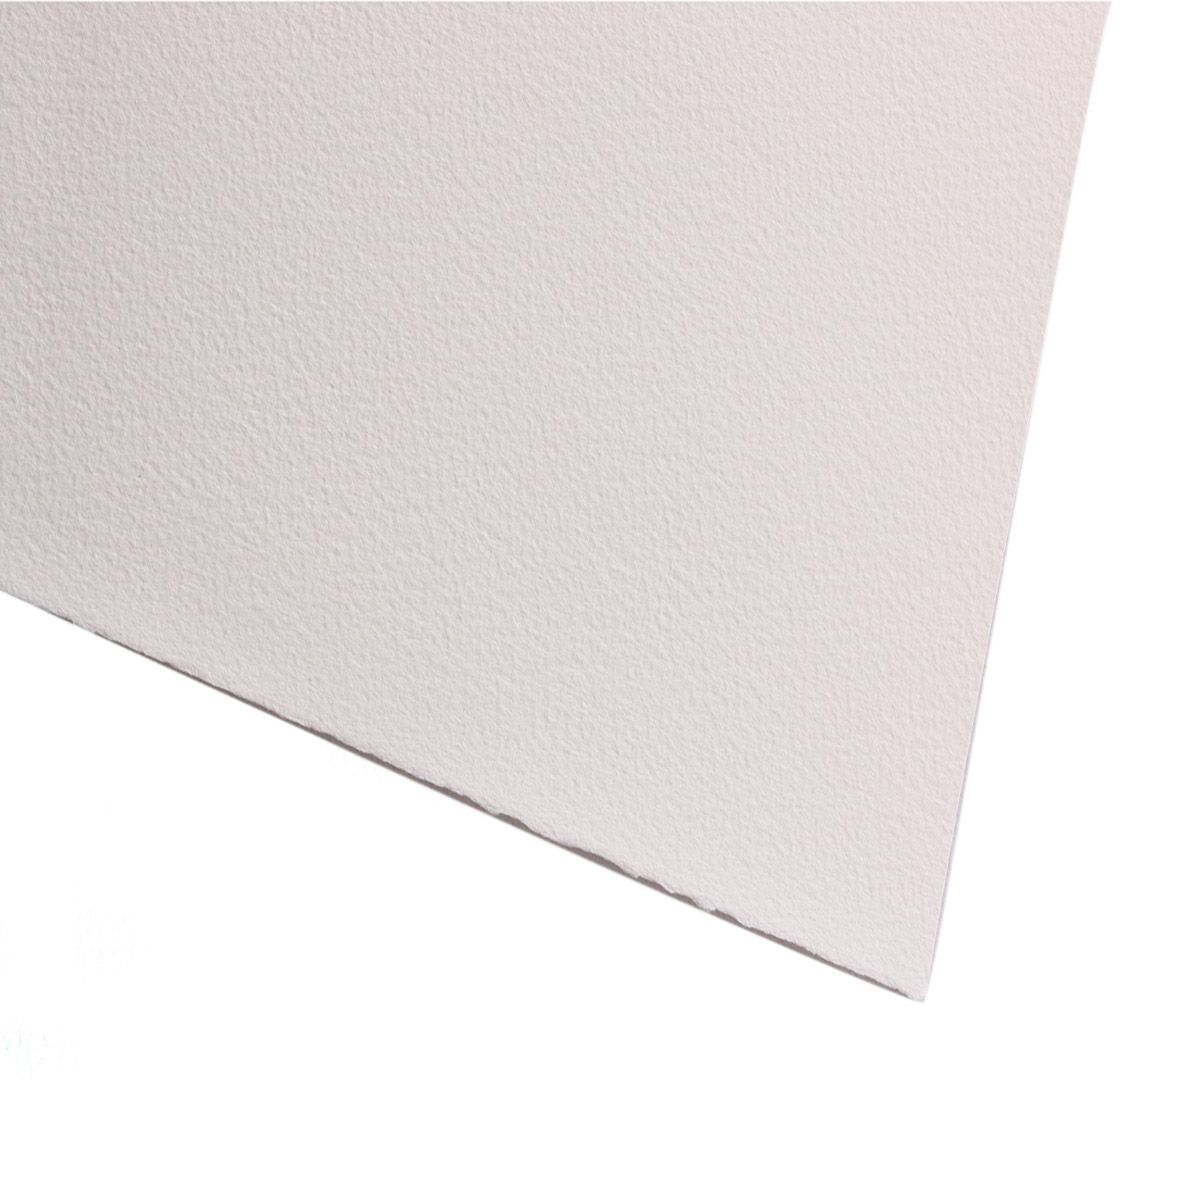 Fabriano Cromia Paper Sheet White 19.6